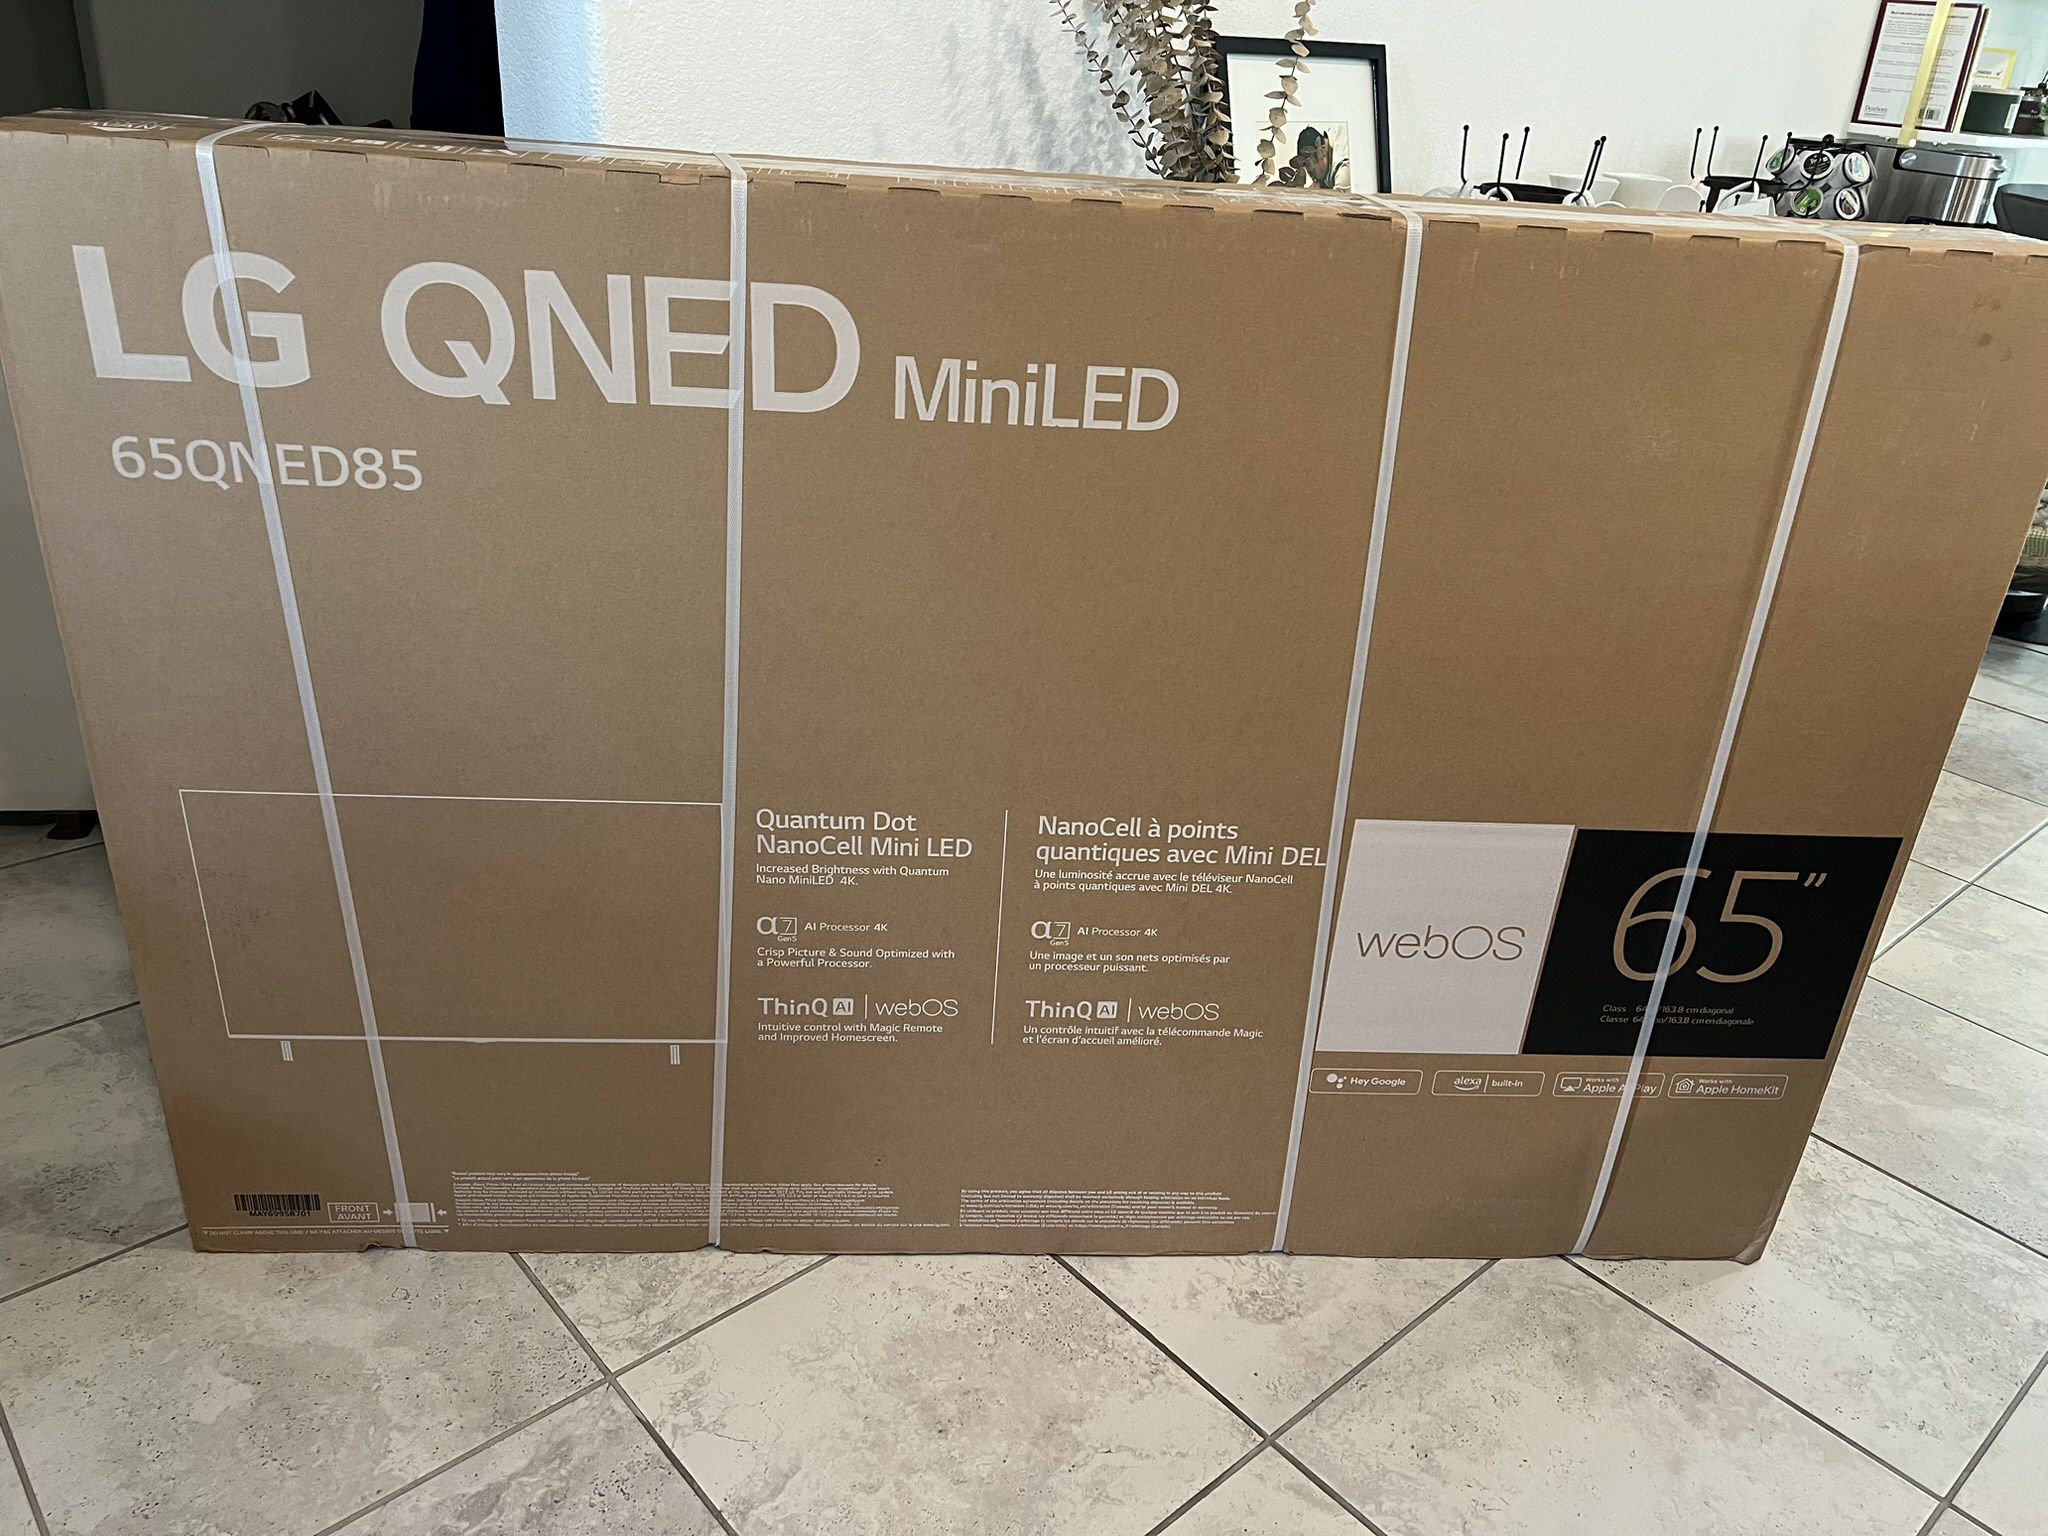 LG 65” QNED85 Mini LED TV, brand new sealed in box